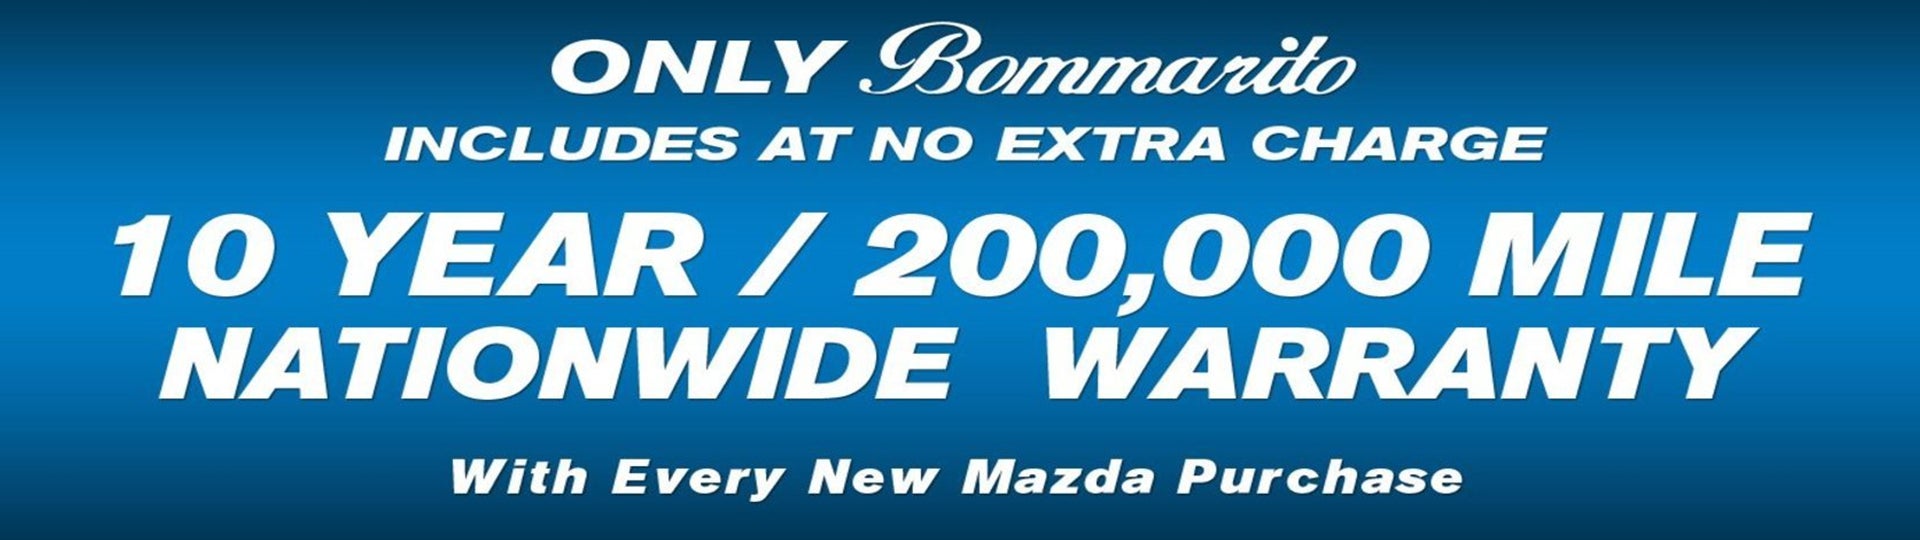 Bommarito Mazda South County Nationwide Warranty for new Mazda vehicles